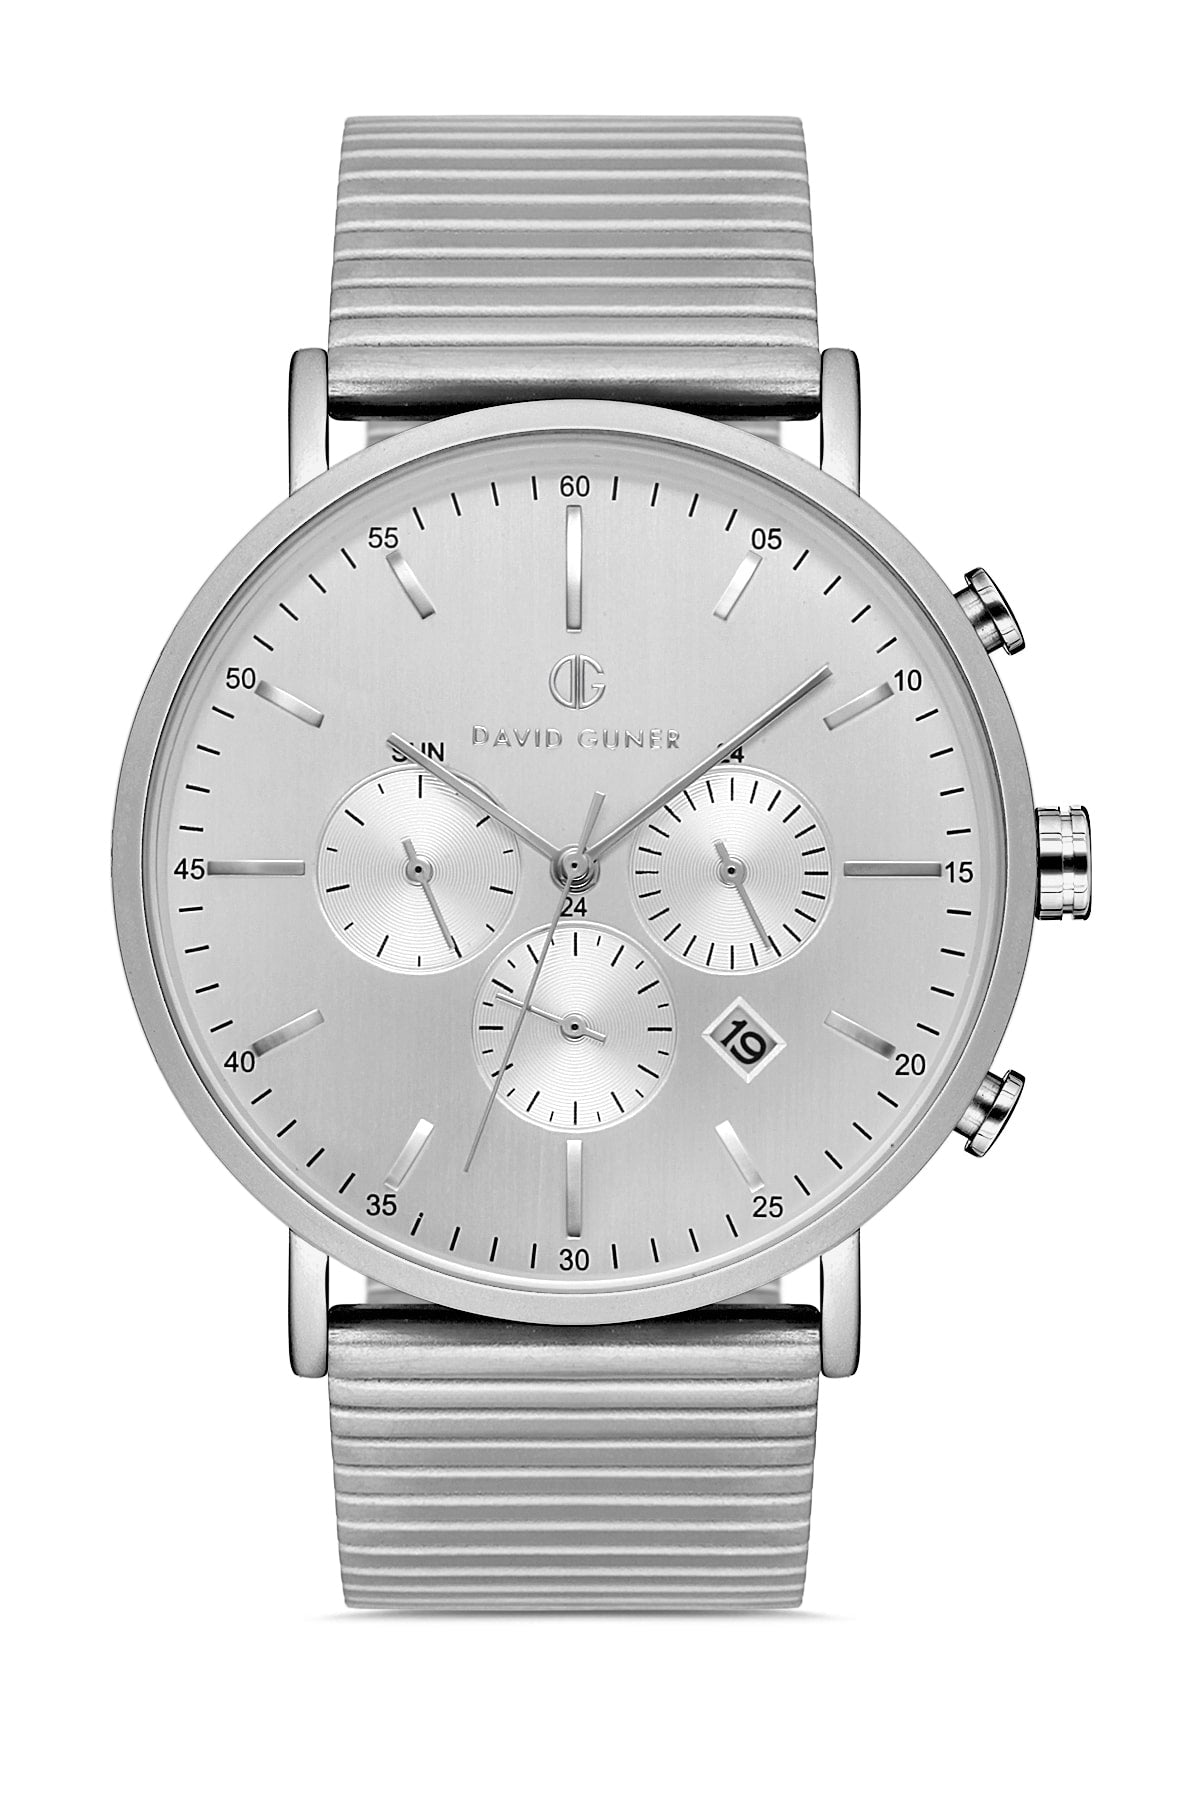 DAVID GUNER Silver Plated Silver Dial Men's Wristwatch